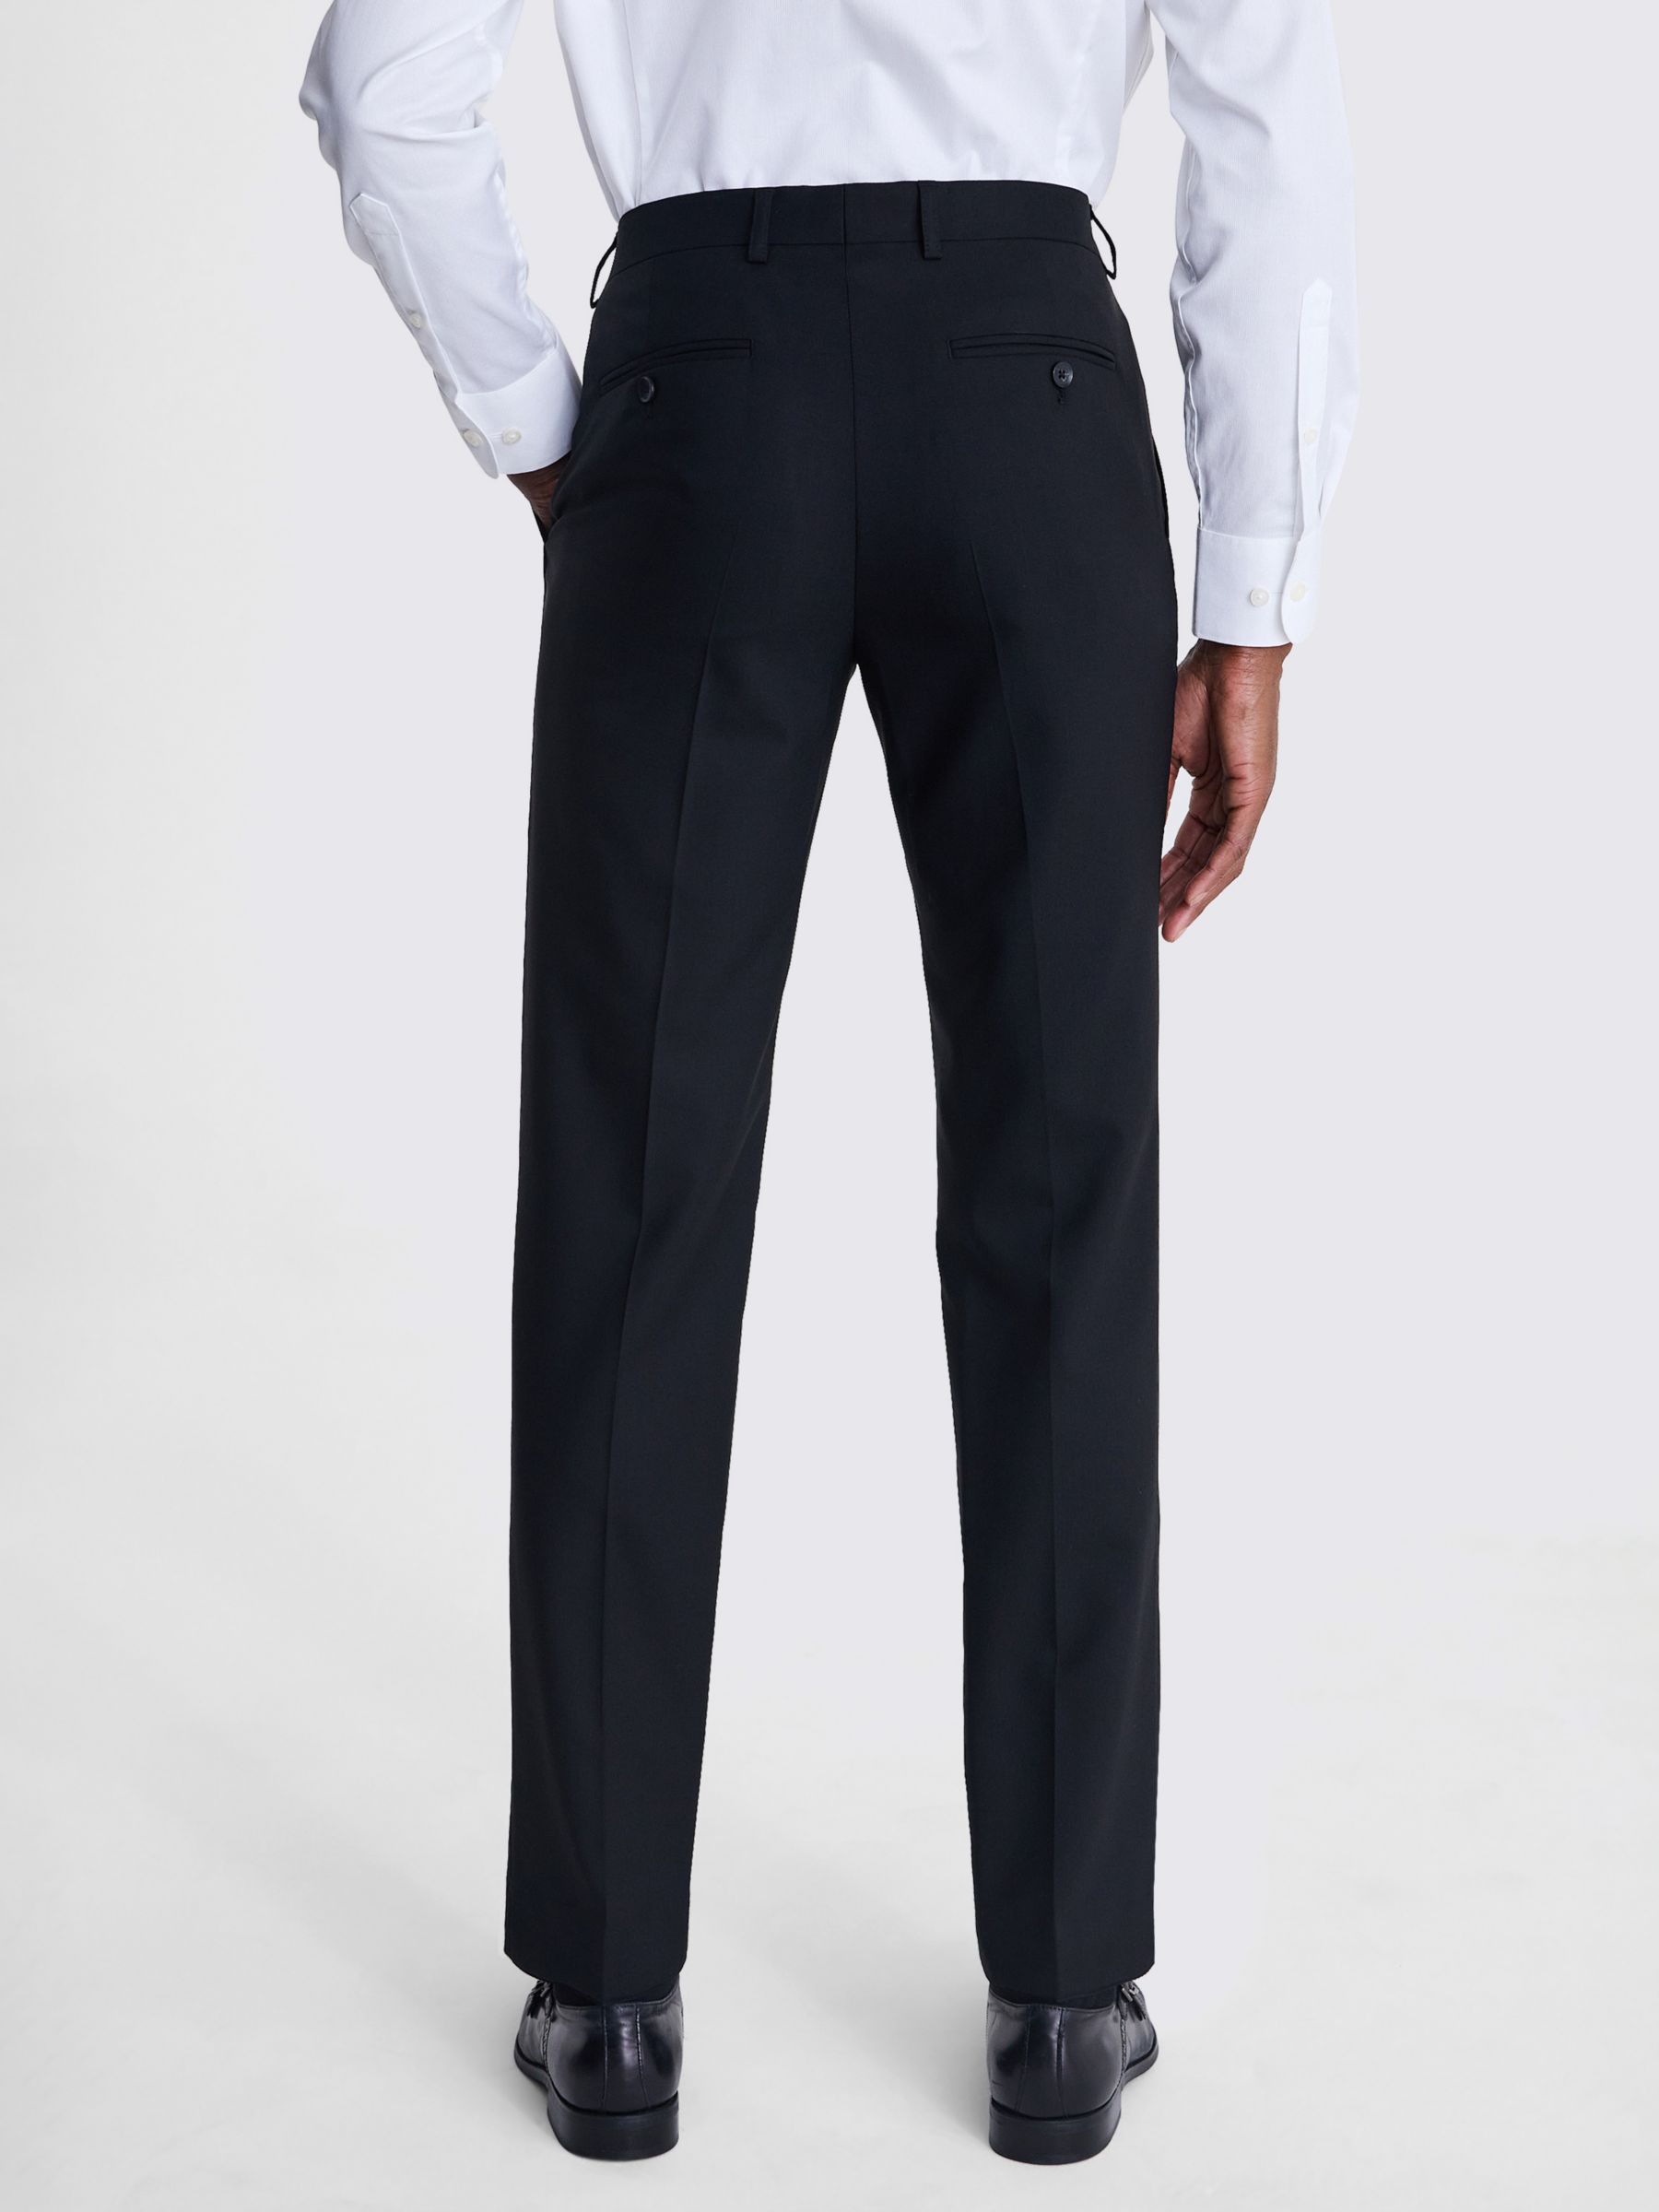 Moss x Barberis Italian Tailored Fit Half Lined Trousers, Black, 30R